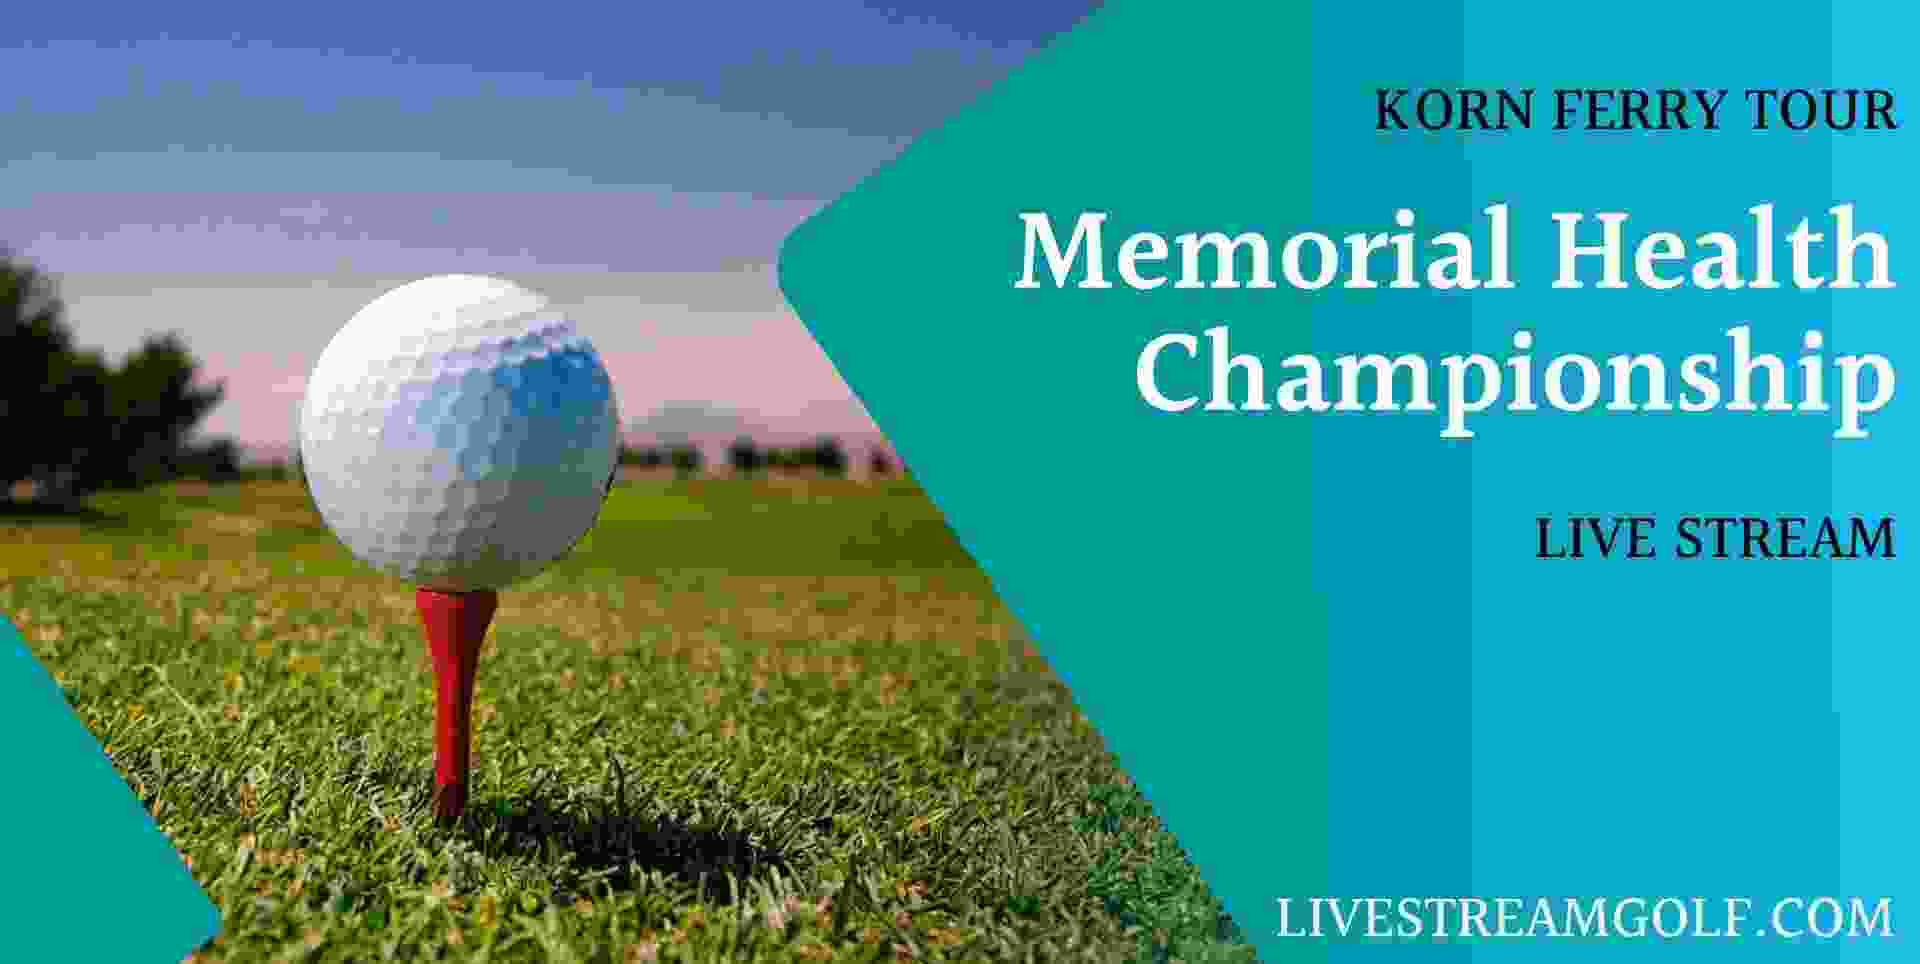 memorial-health-championship-live-stream-korn-ferry